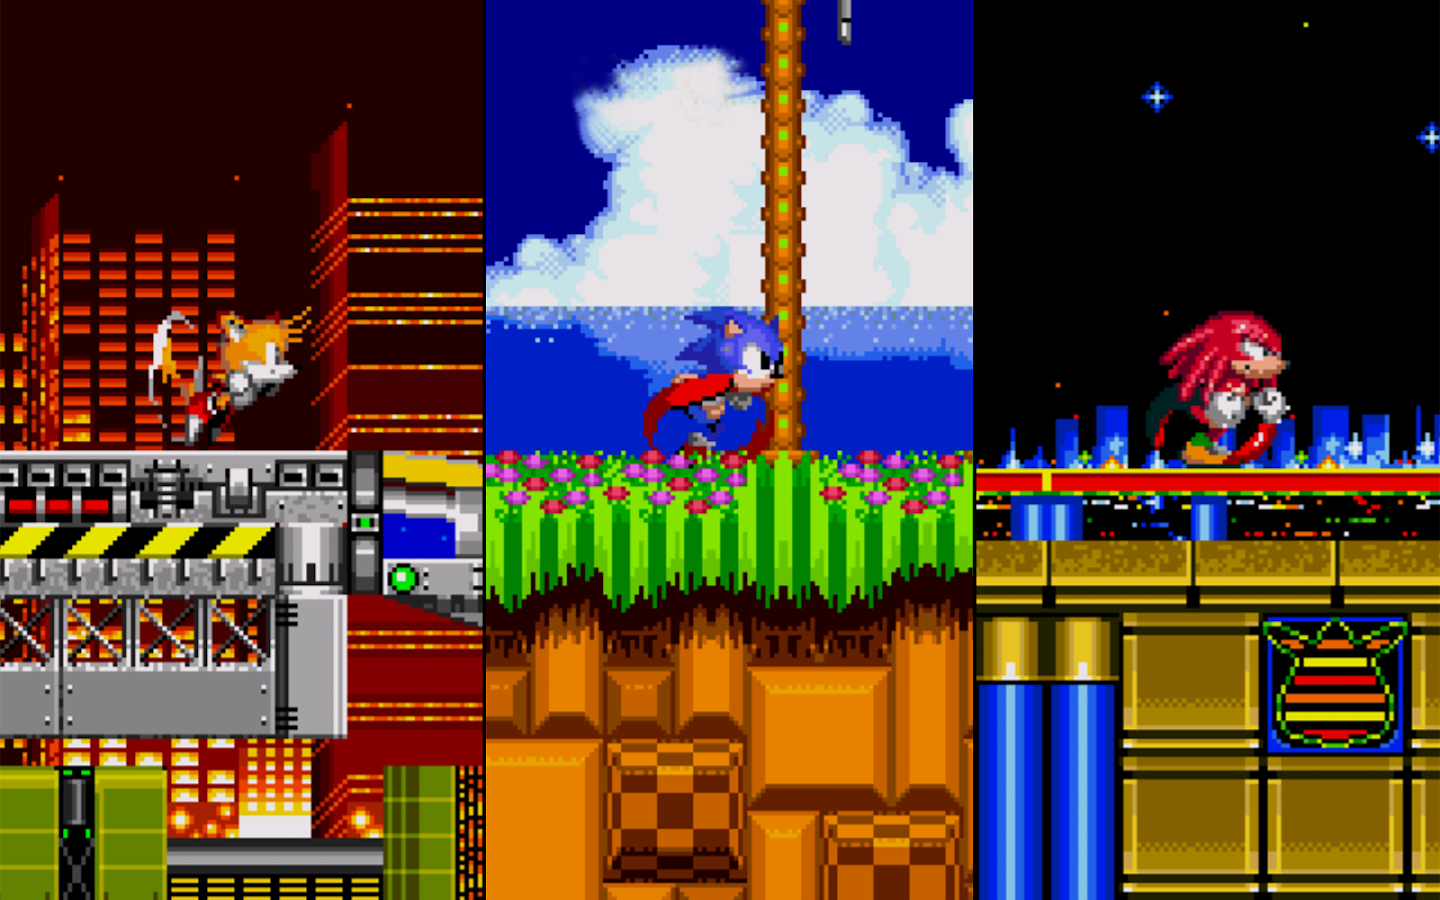 Sonic The Hedgehog 2 V3.0.2 Apk Full [Zippyshare] L1WDyQ34cKBqqIe5UZvoIqaGfLzZ4dL3chcOcDx7qaV8Sfe_GTeRgMTCox_g3QWFiw=h900-rw